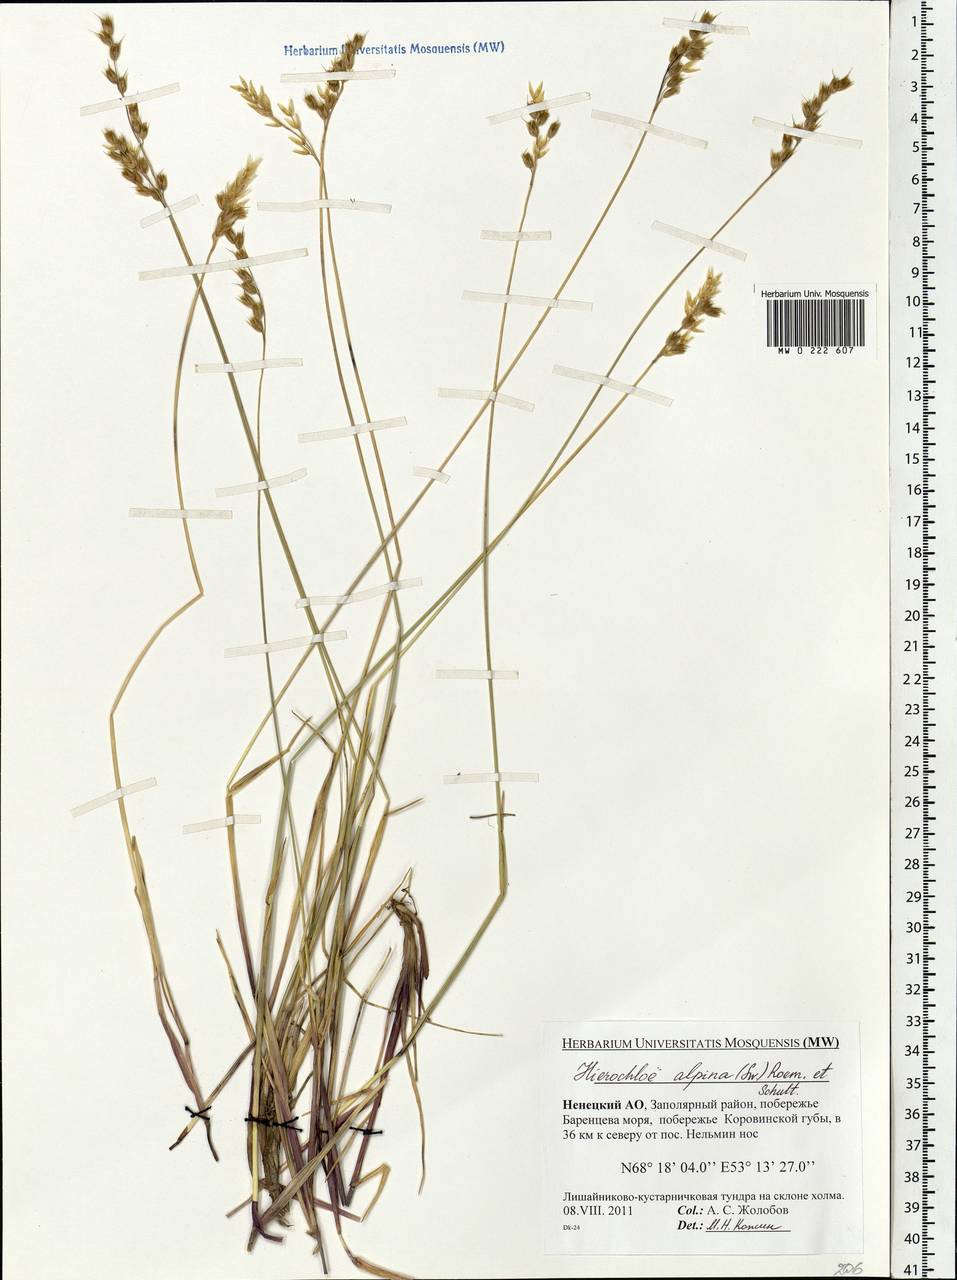 Anthoxanthum monticola (Bigelow) Veldkamp, Eastern Europe, Northern region (E1) (Russia)